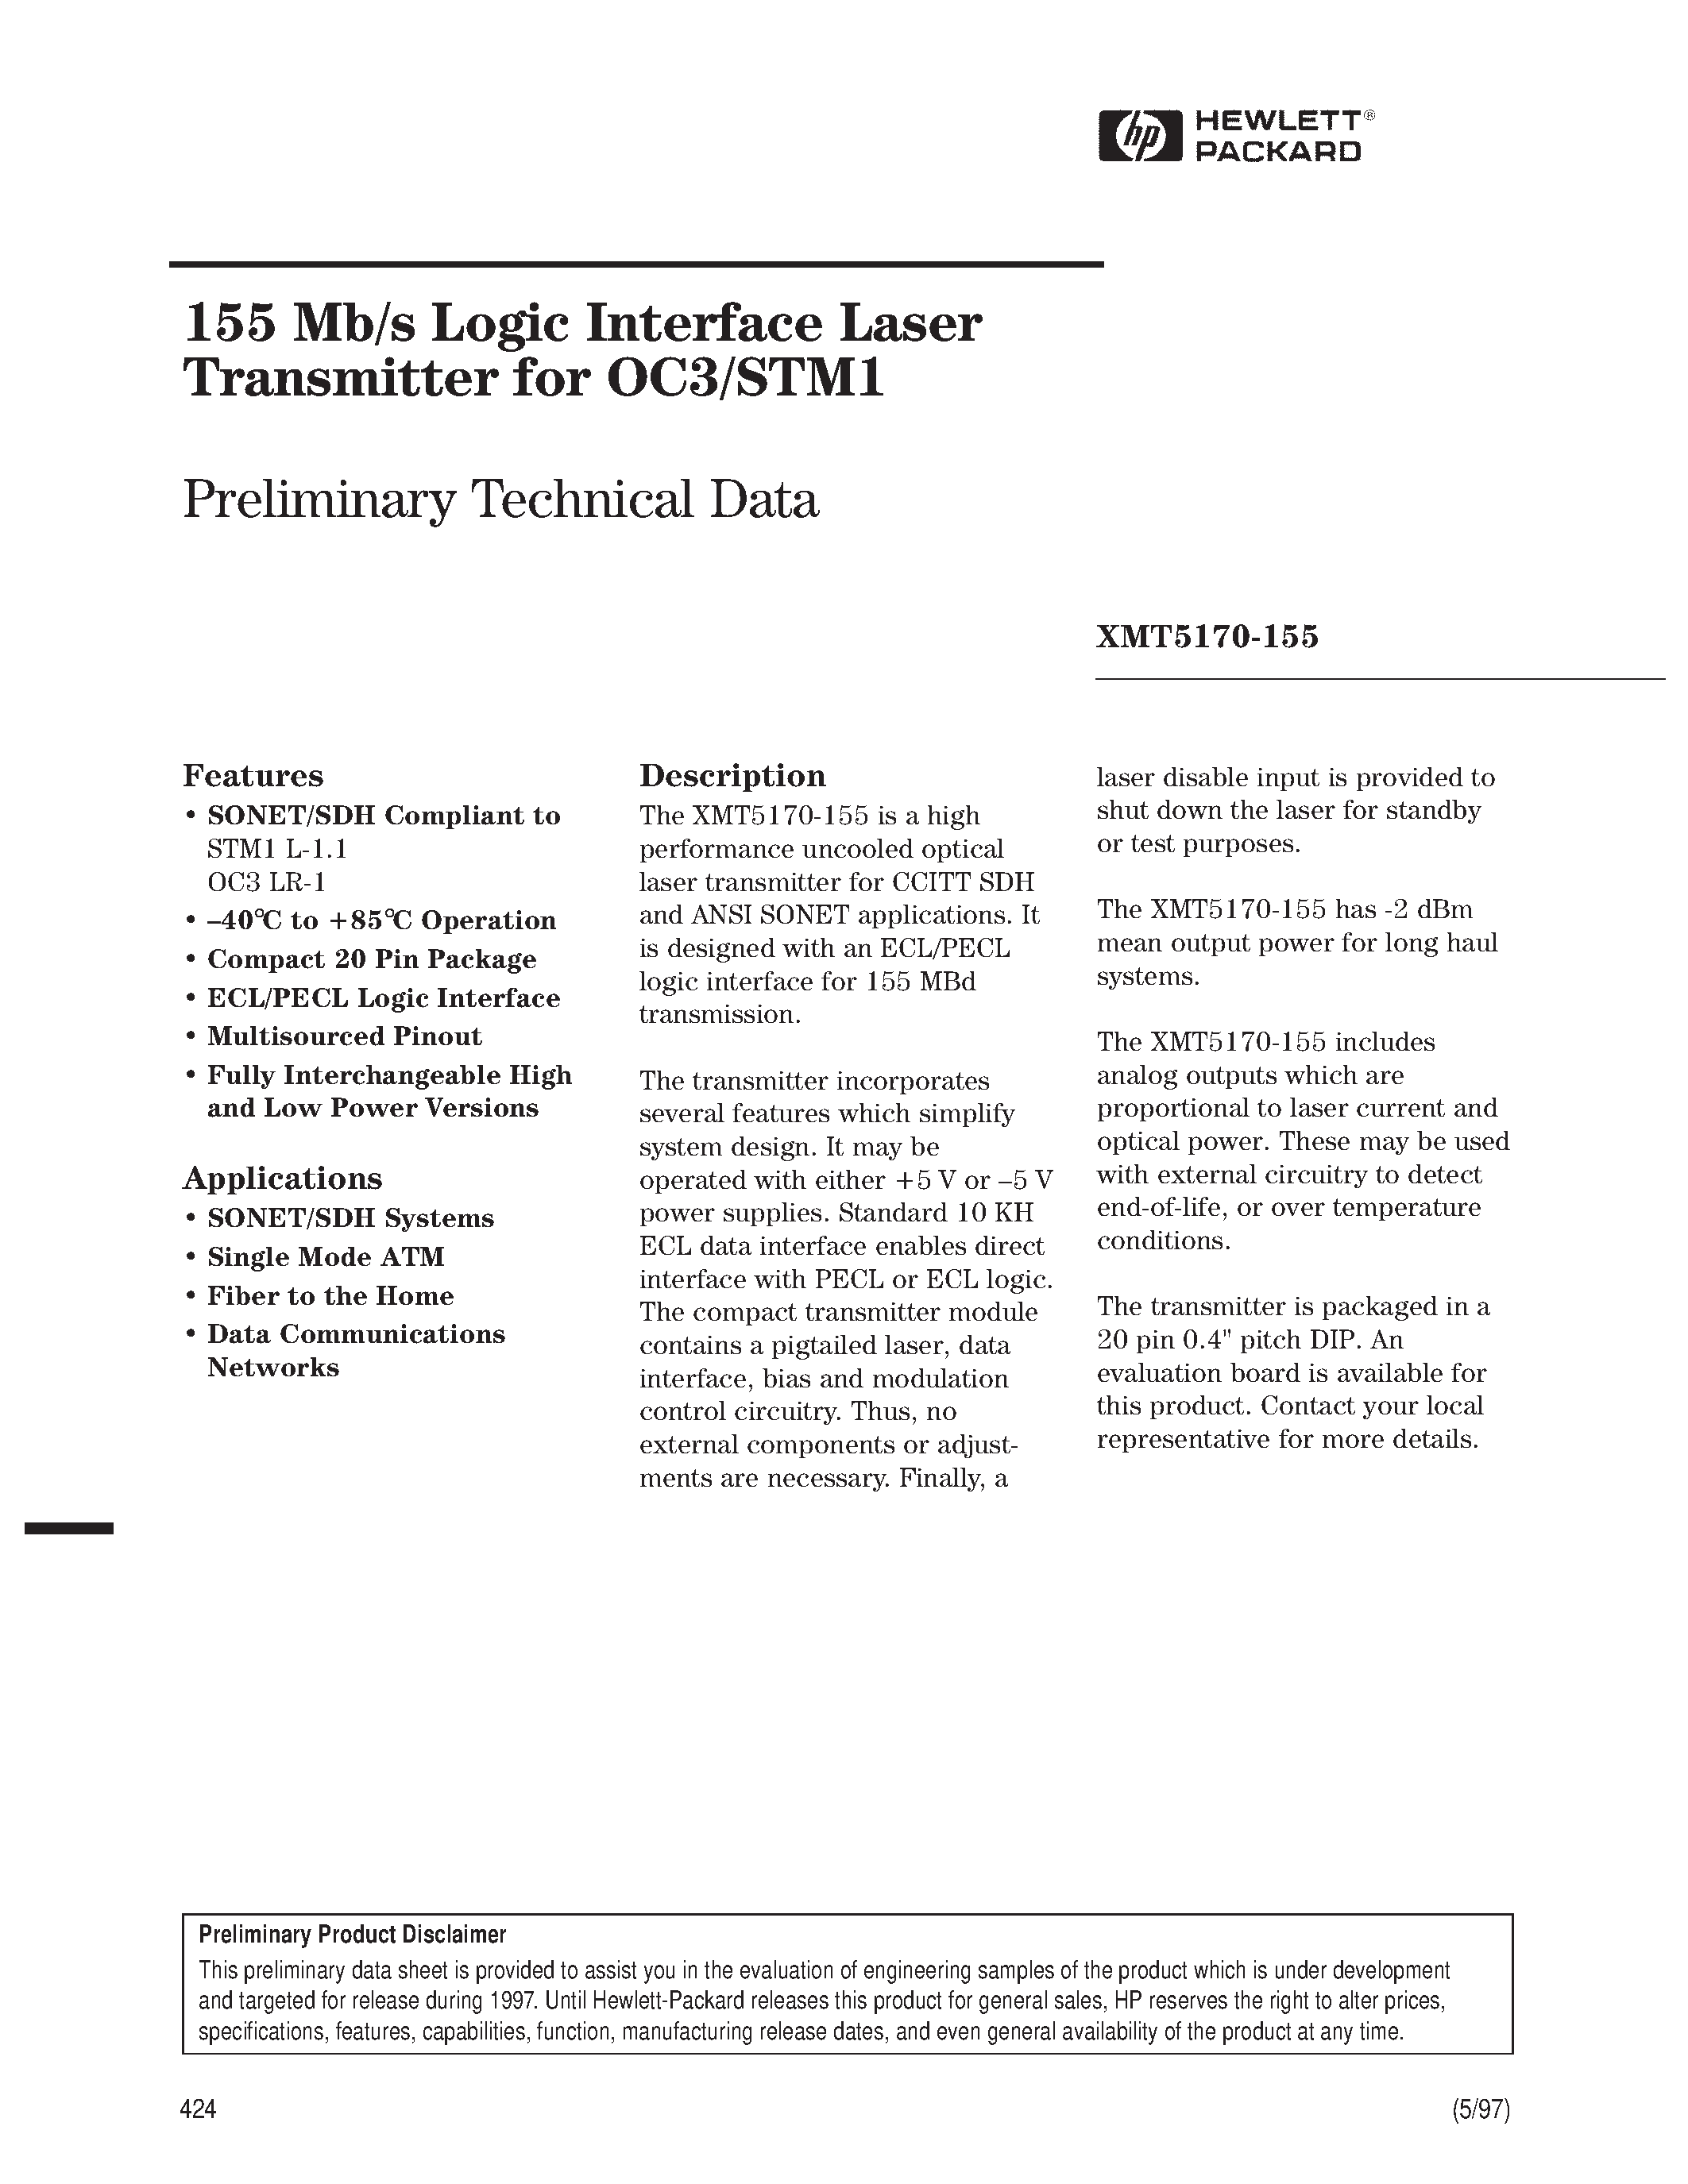 Datasheet XMT5170B-155-FP - 155 Mb/s Logic Interface Laser Transmitter for OC3/STM1 page 1